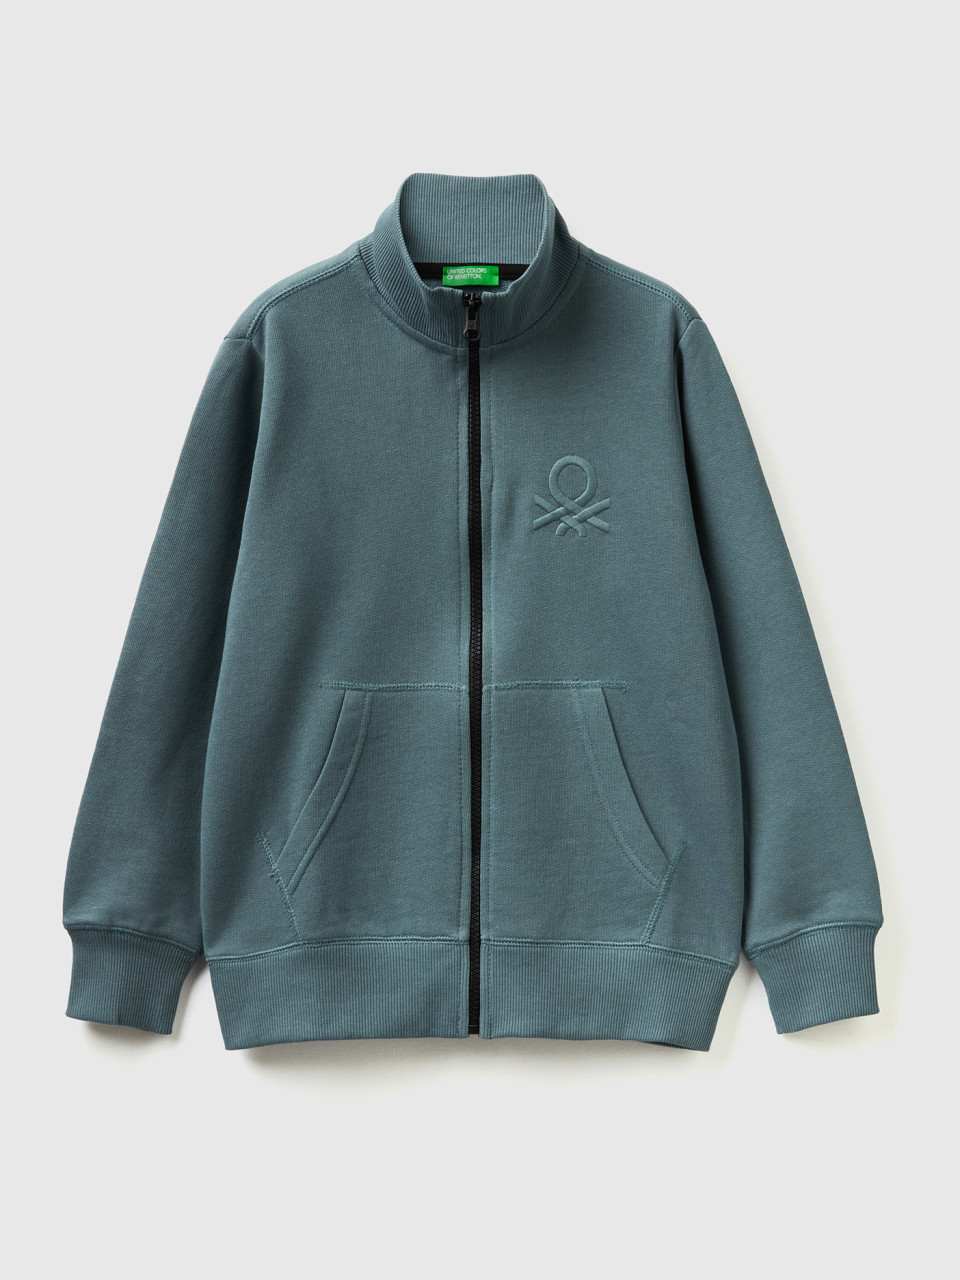 Benetton, Pure Cotton Sweatshirt With Zipper, Dark Gray, Kids